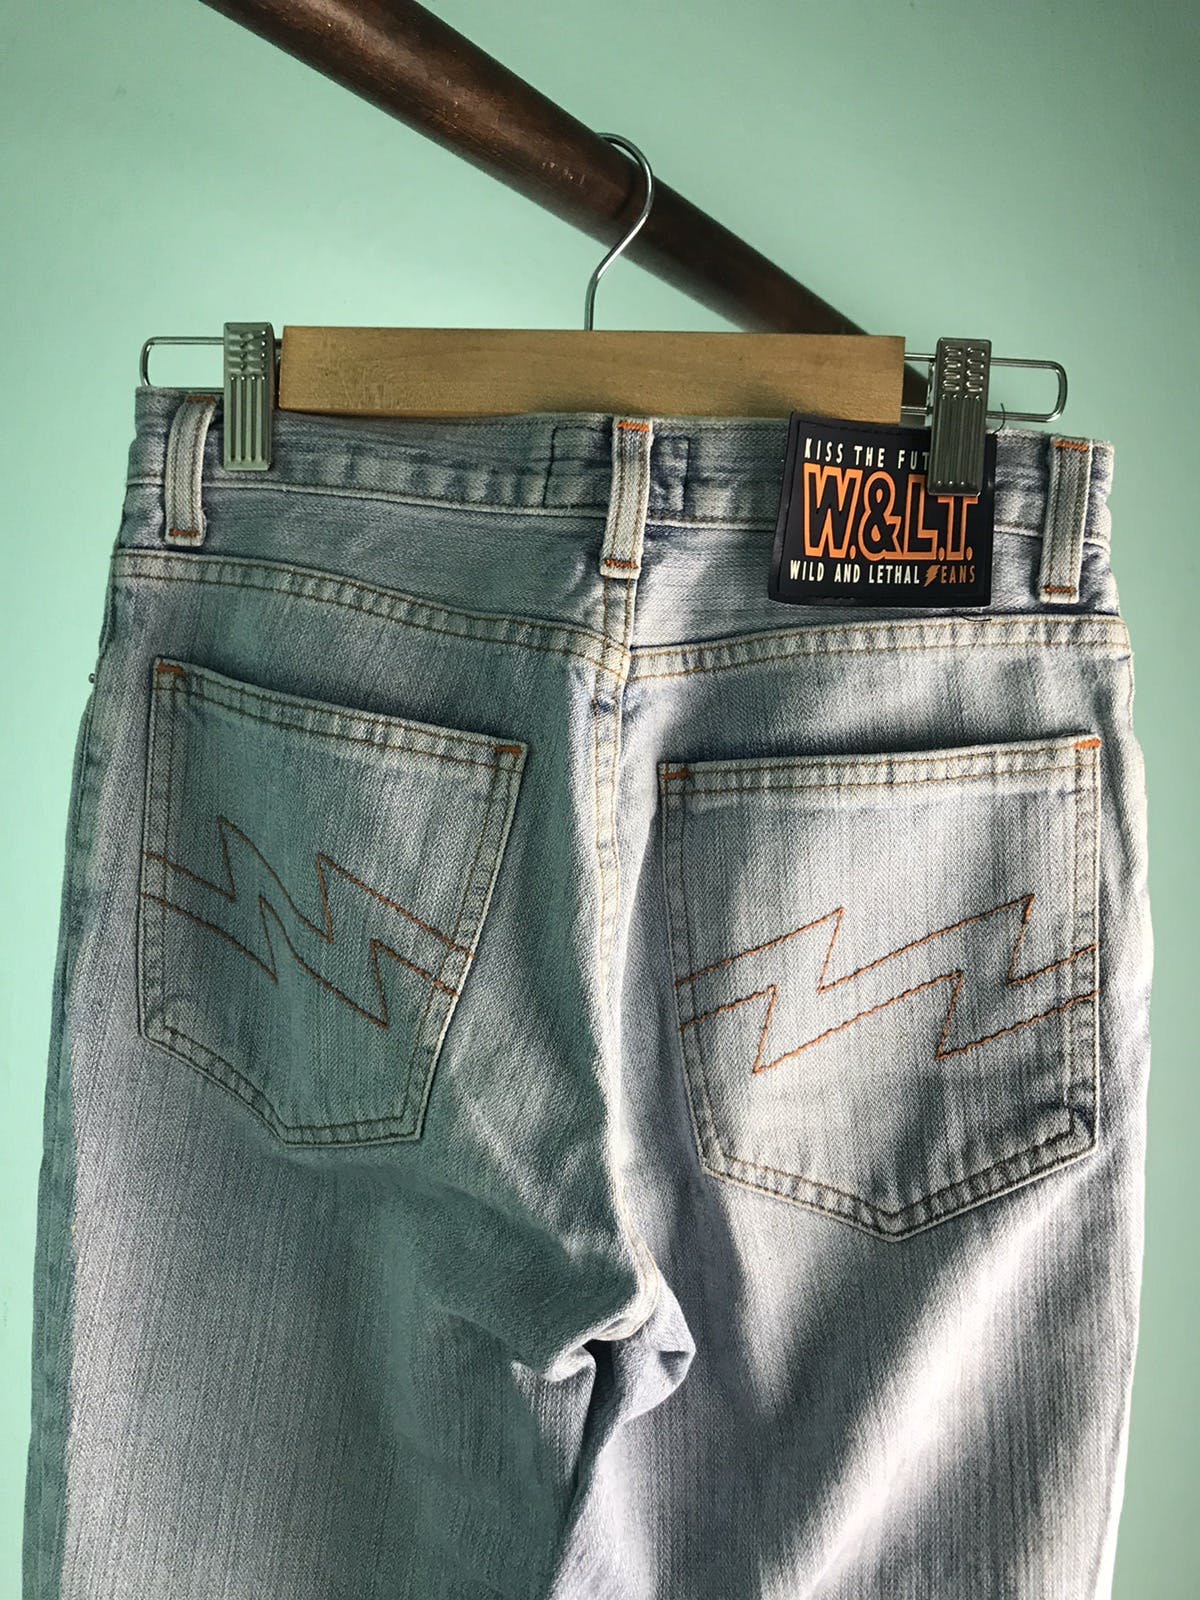 Vintage W&lt Denim Jeans - 8